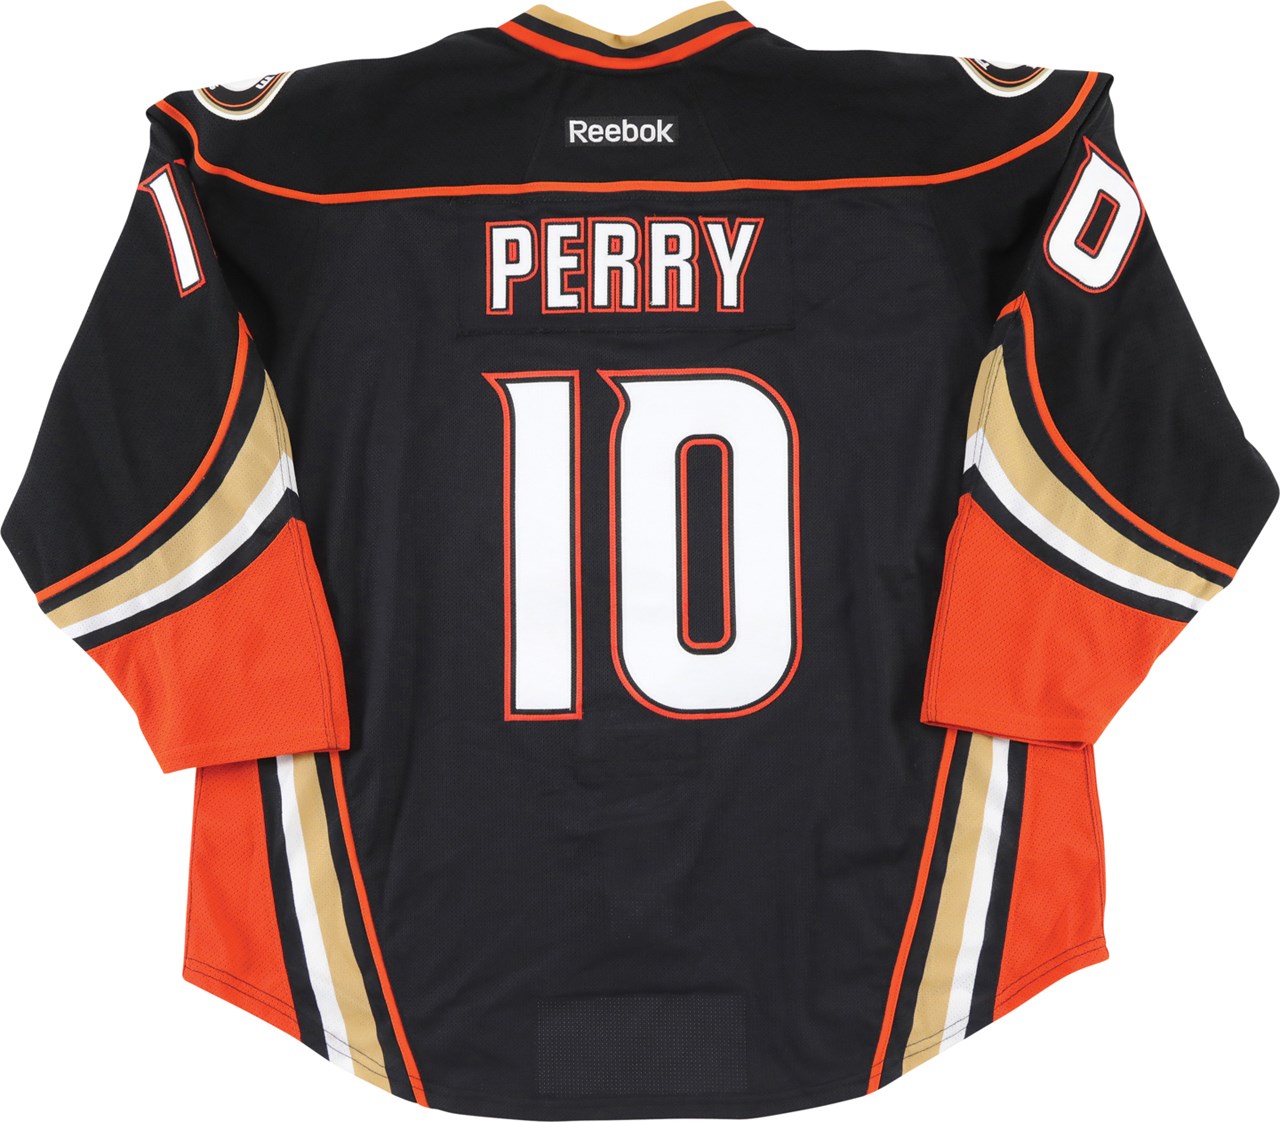 2015 Corey Perry Anaheim Ducks Teemu Selanne Tribute Night Game Worn Jersey